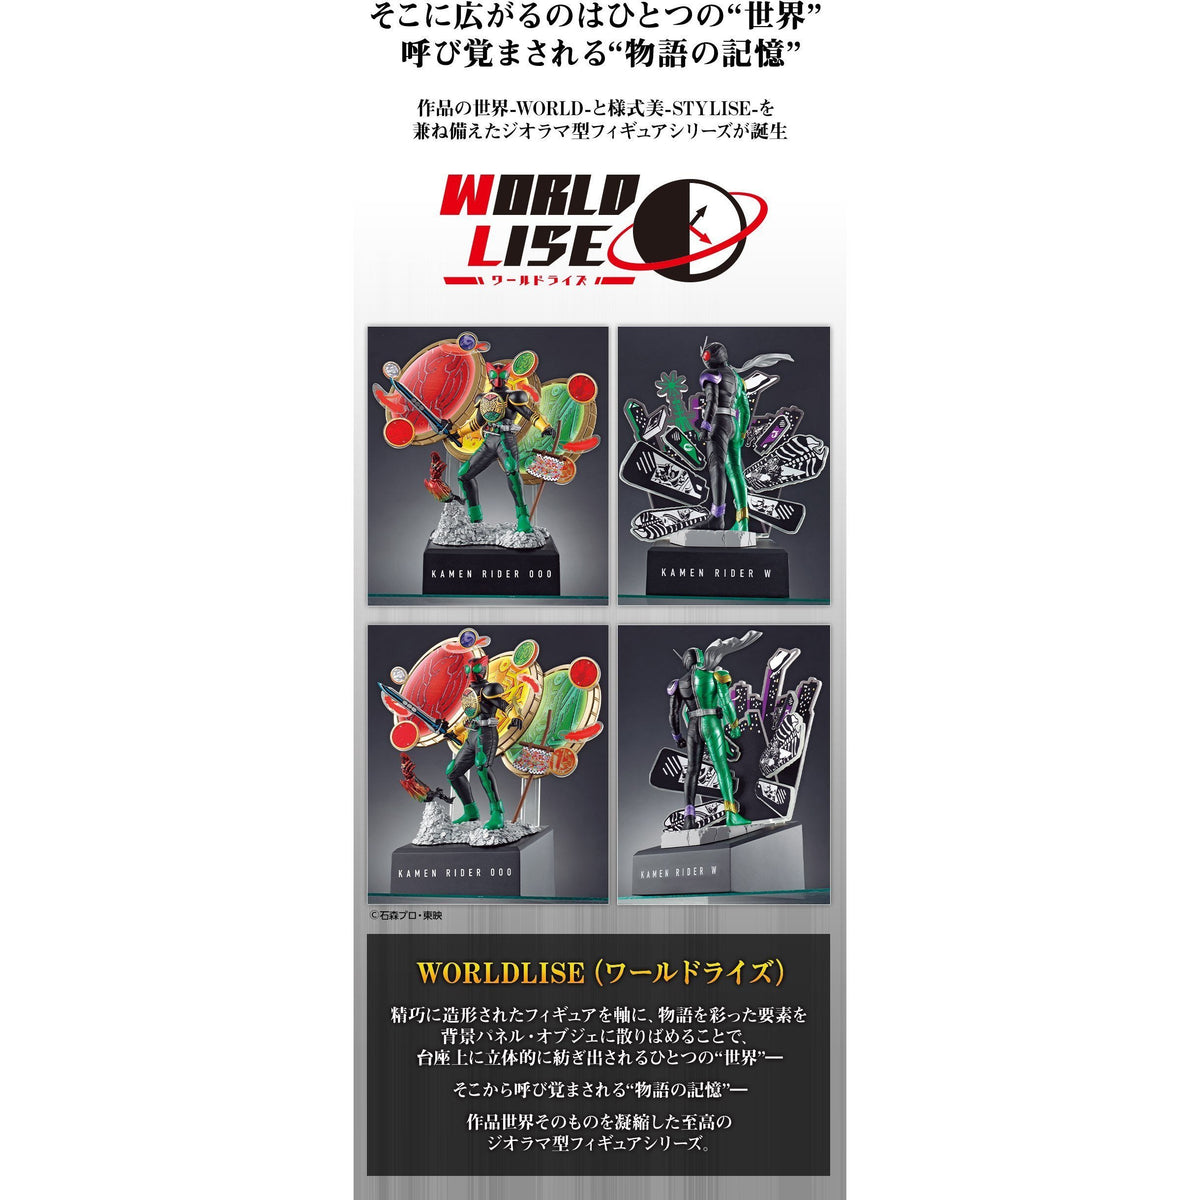 Ichiban Kuji Kamen Rider OOO &amp; W ~OOO 10th Anniversary~-Bandai-Ace Cards &amp; Collectibles